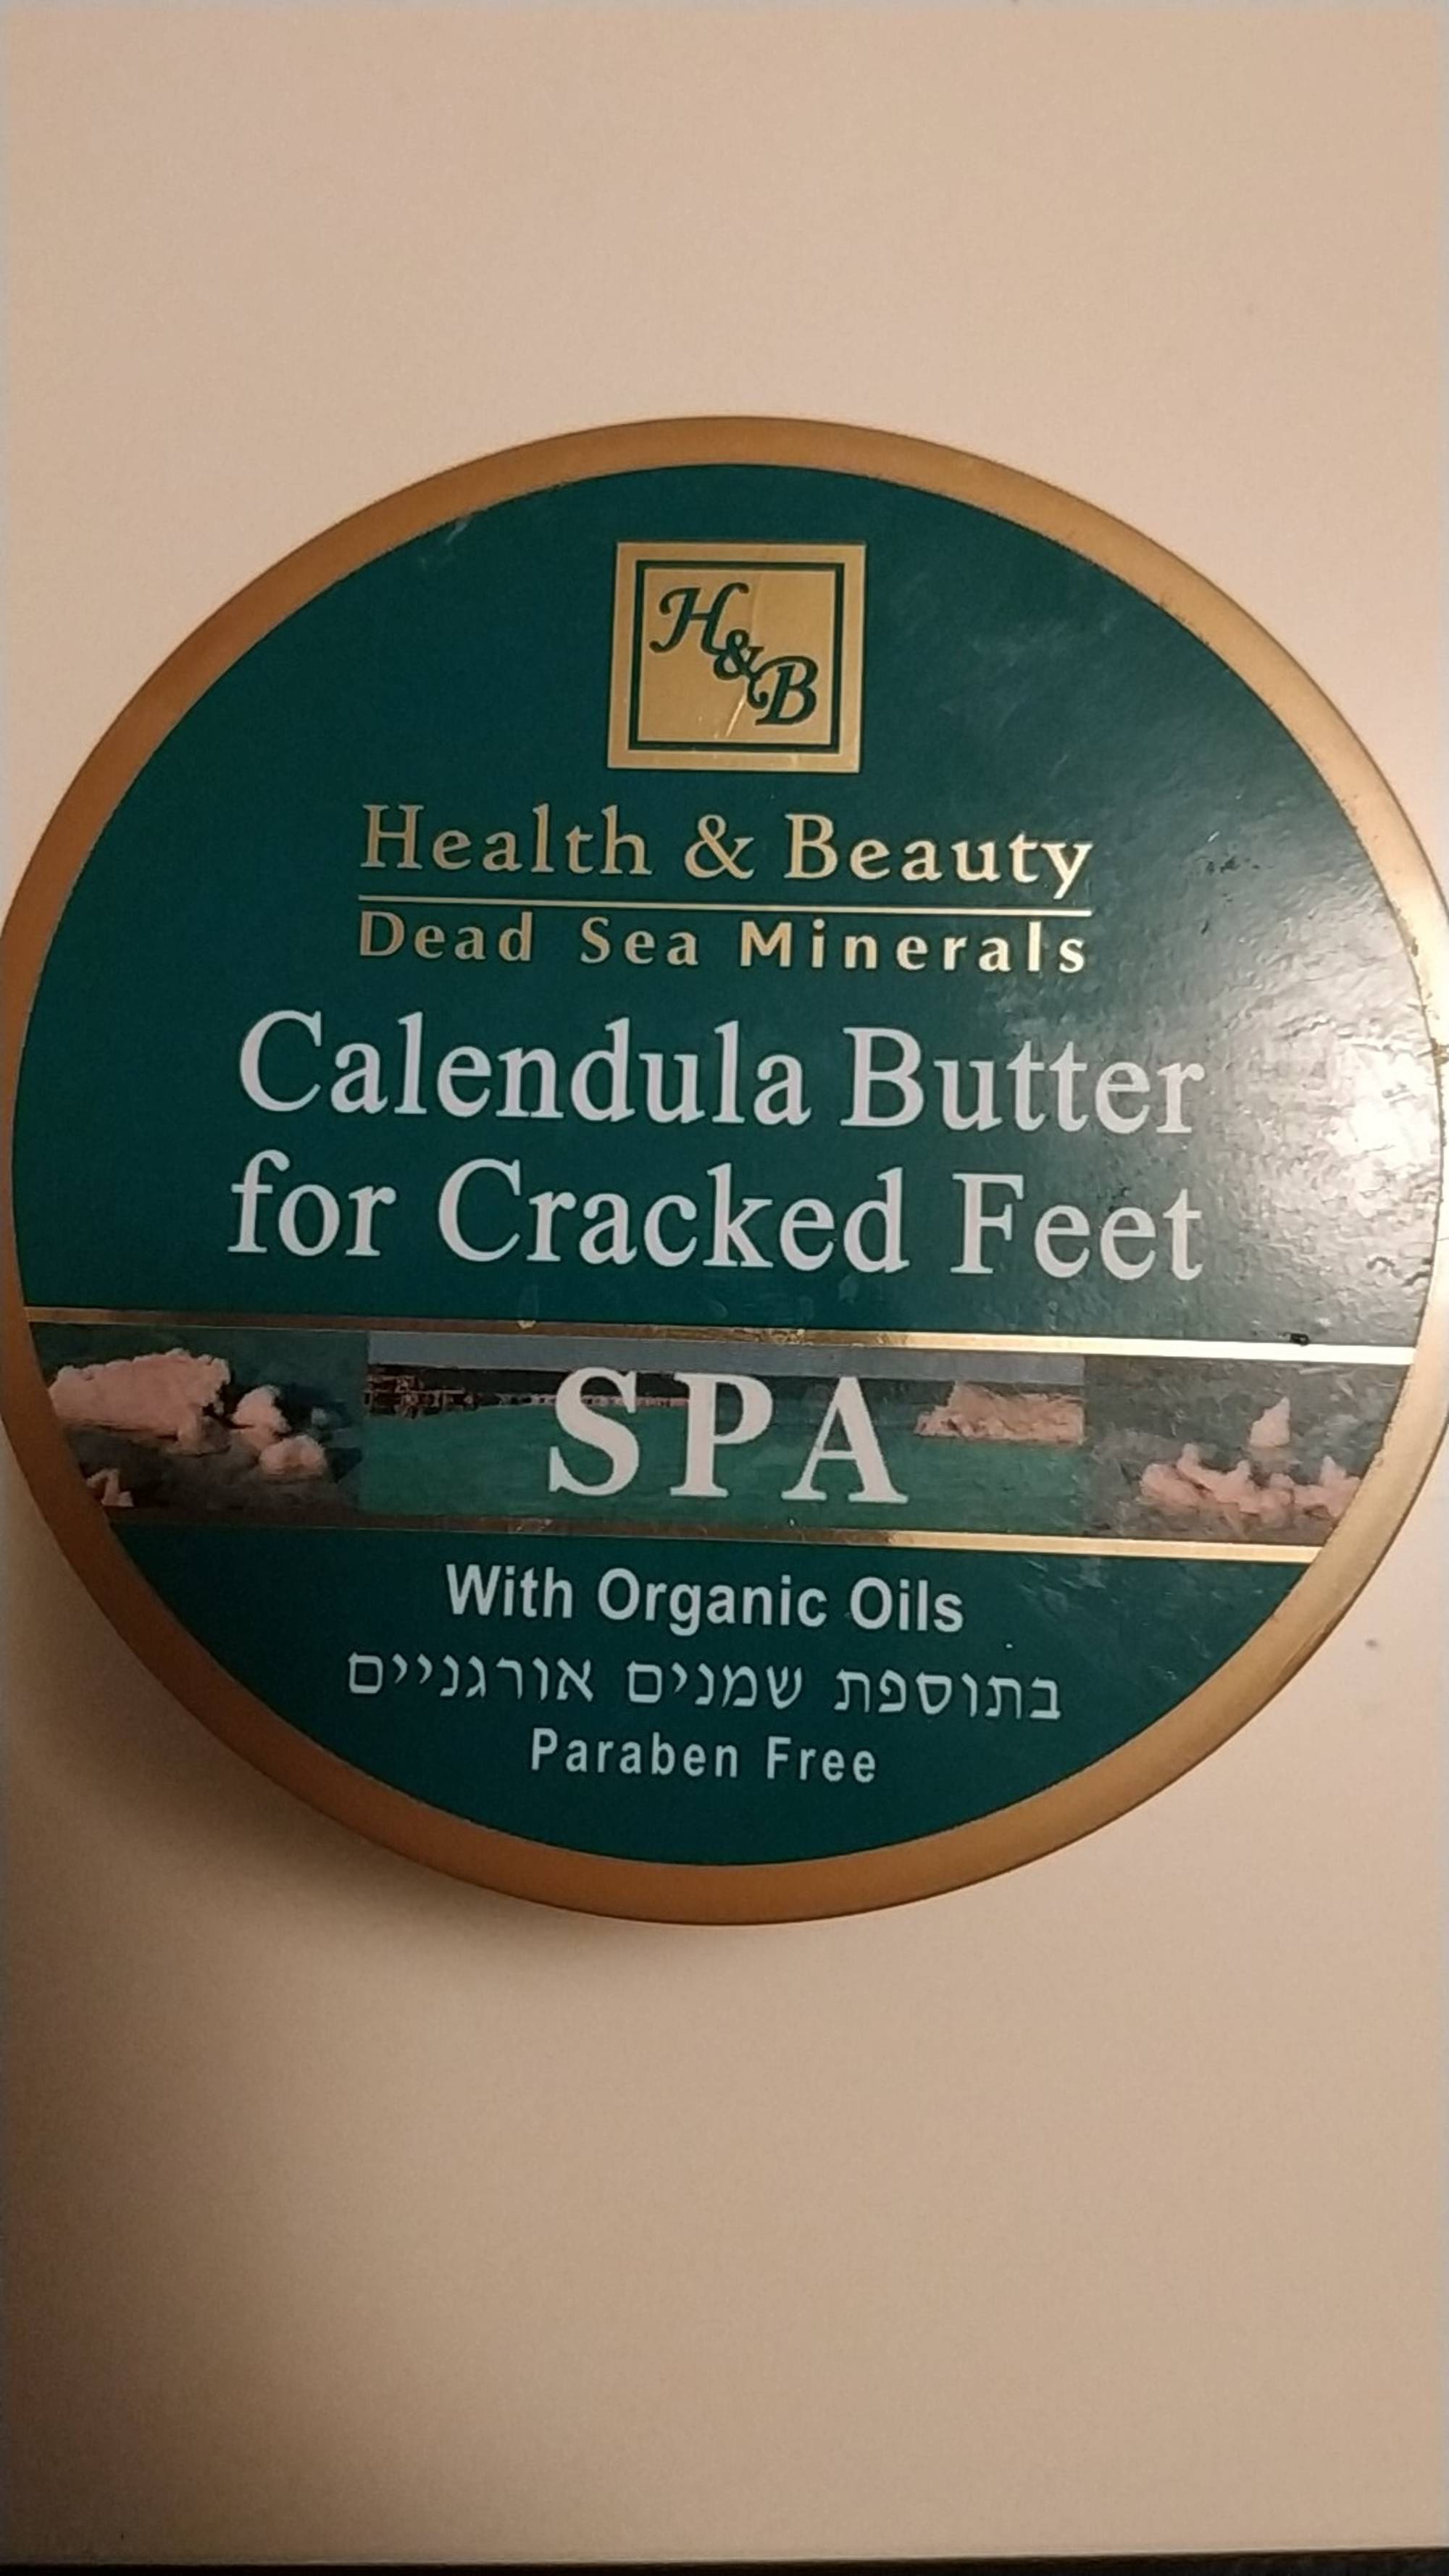 HEALTH & BEAUTY - SPA - Calendula butter for cracked feet